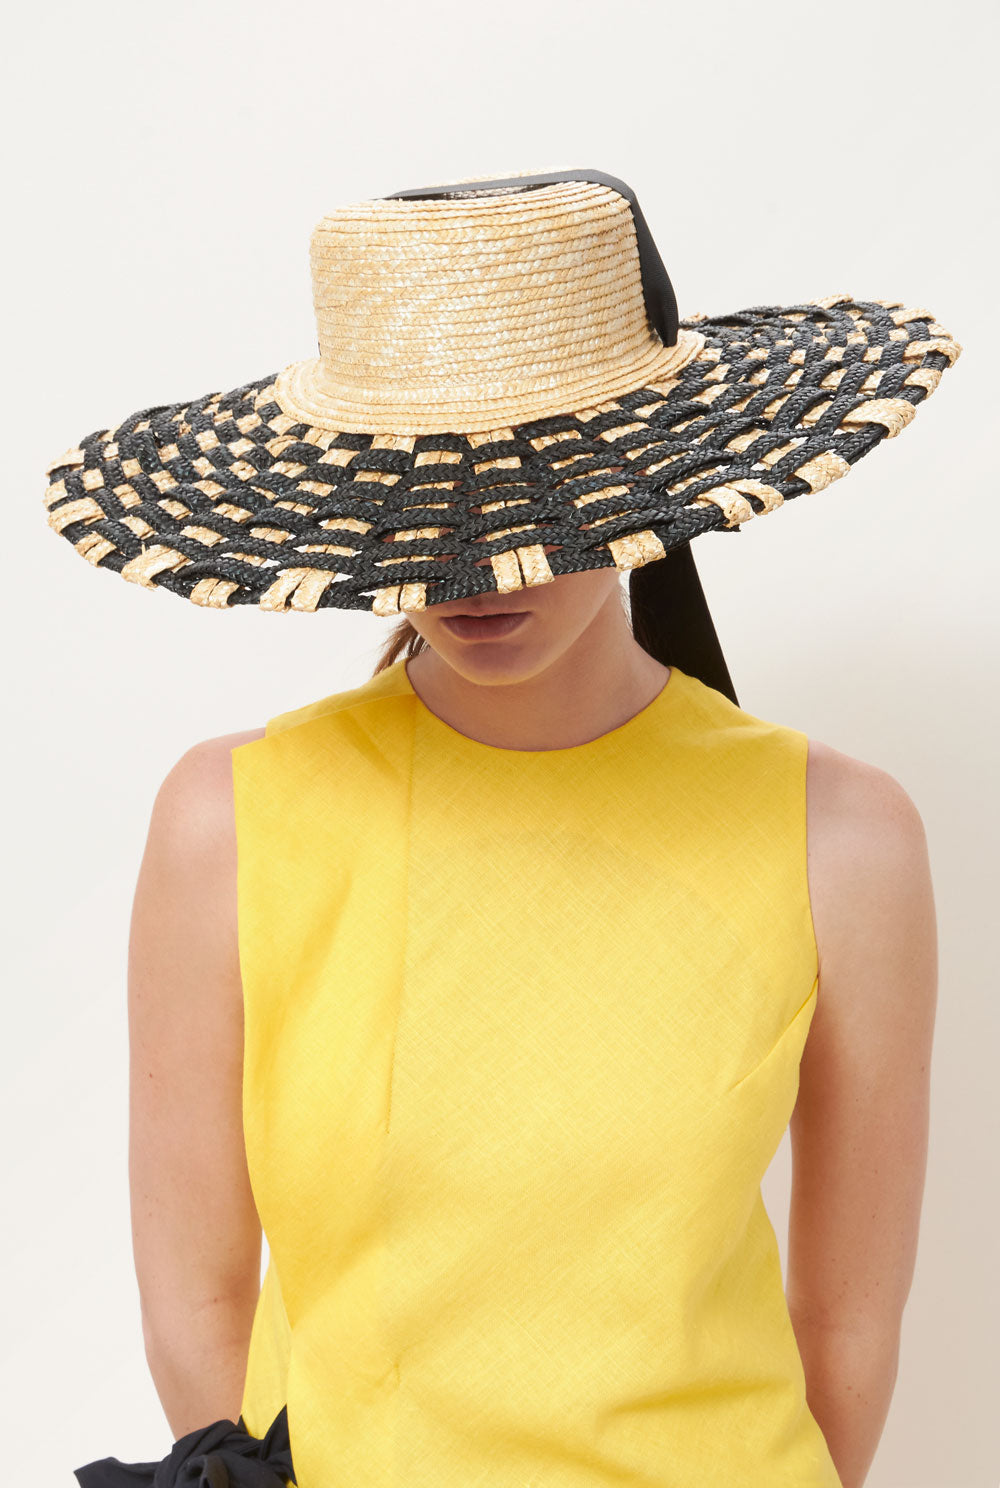 Tris-tras straw hat natural and black headpiece Zahati 